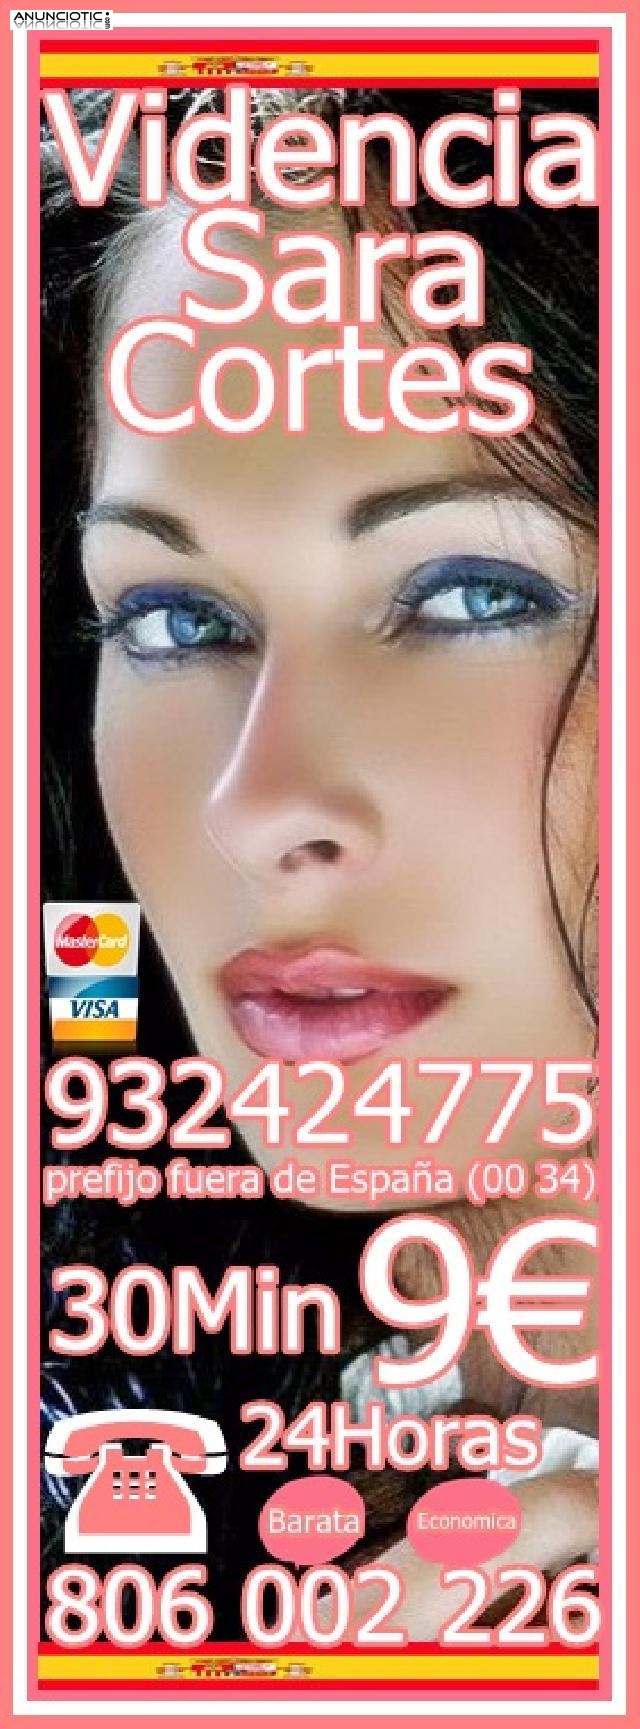 Tarot  Sara Cortes 932 424 775  desde 4 15 min, 7 20mts 9 30mts. 60M 20 